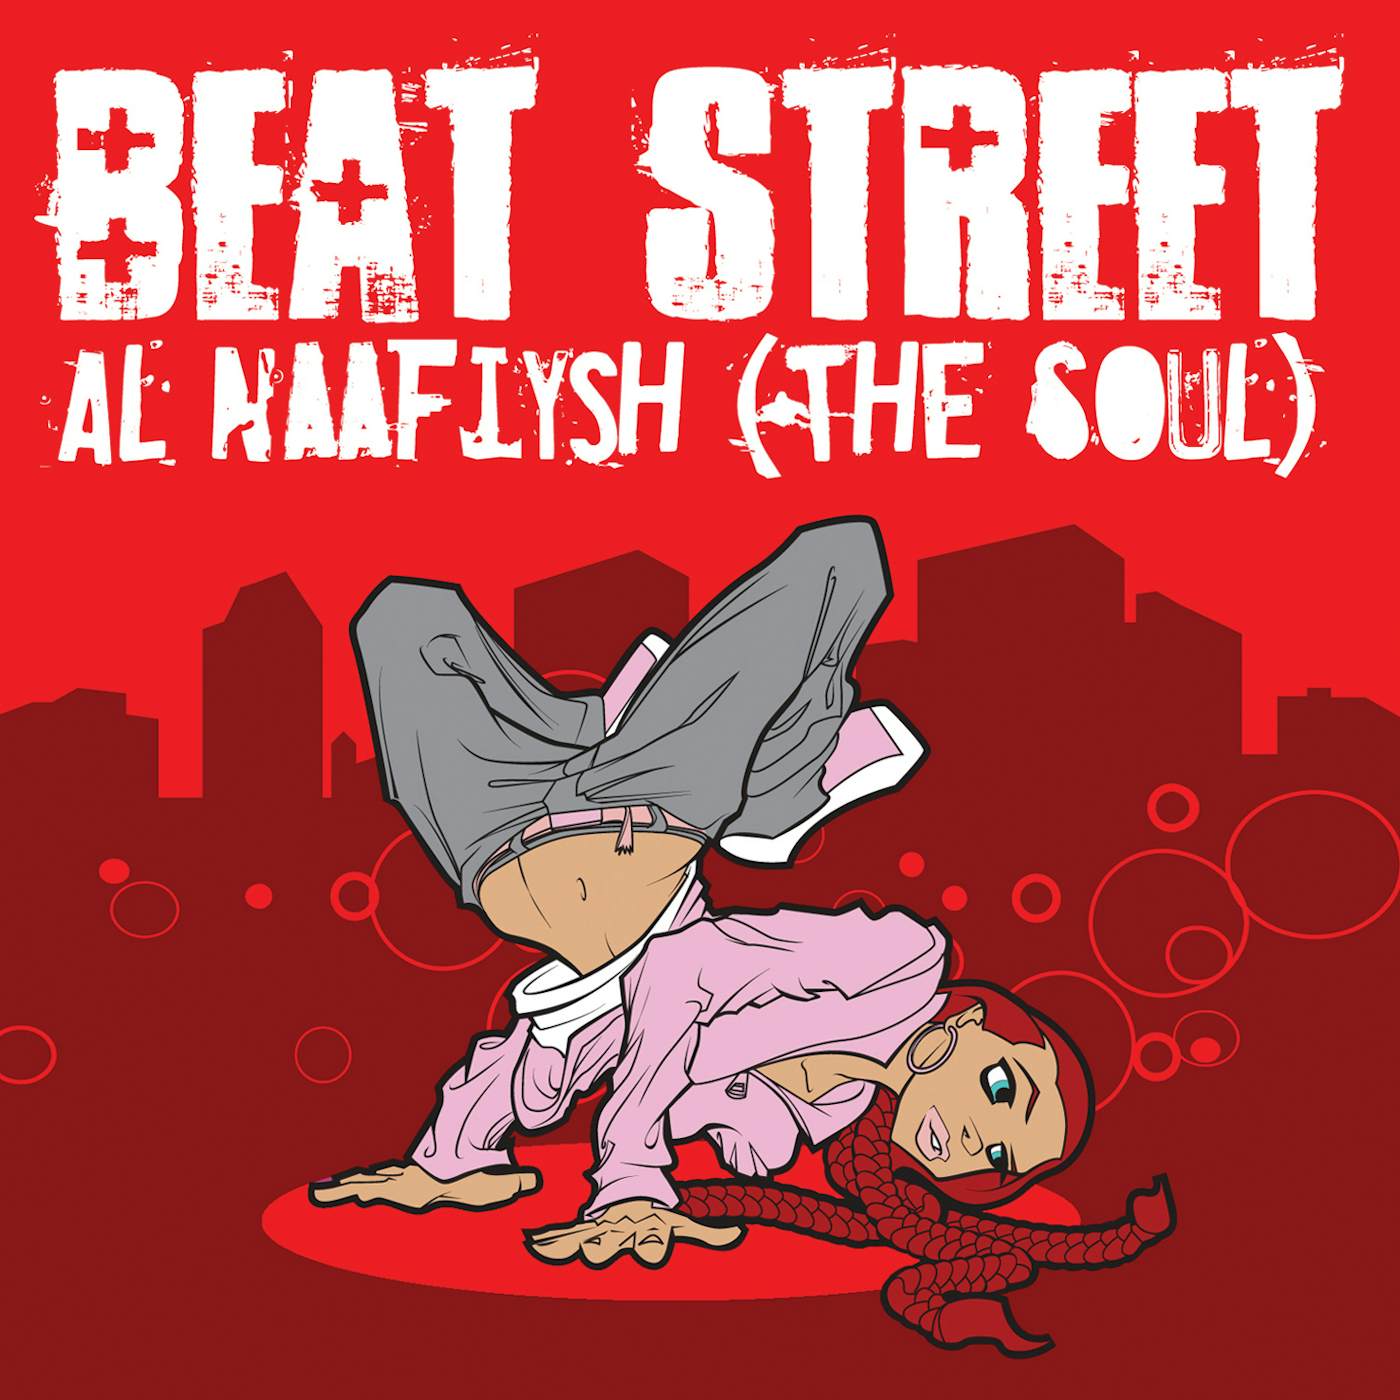 Beat Street AL NAAFIYSH (THE SOUL) CD